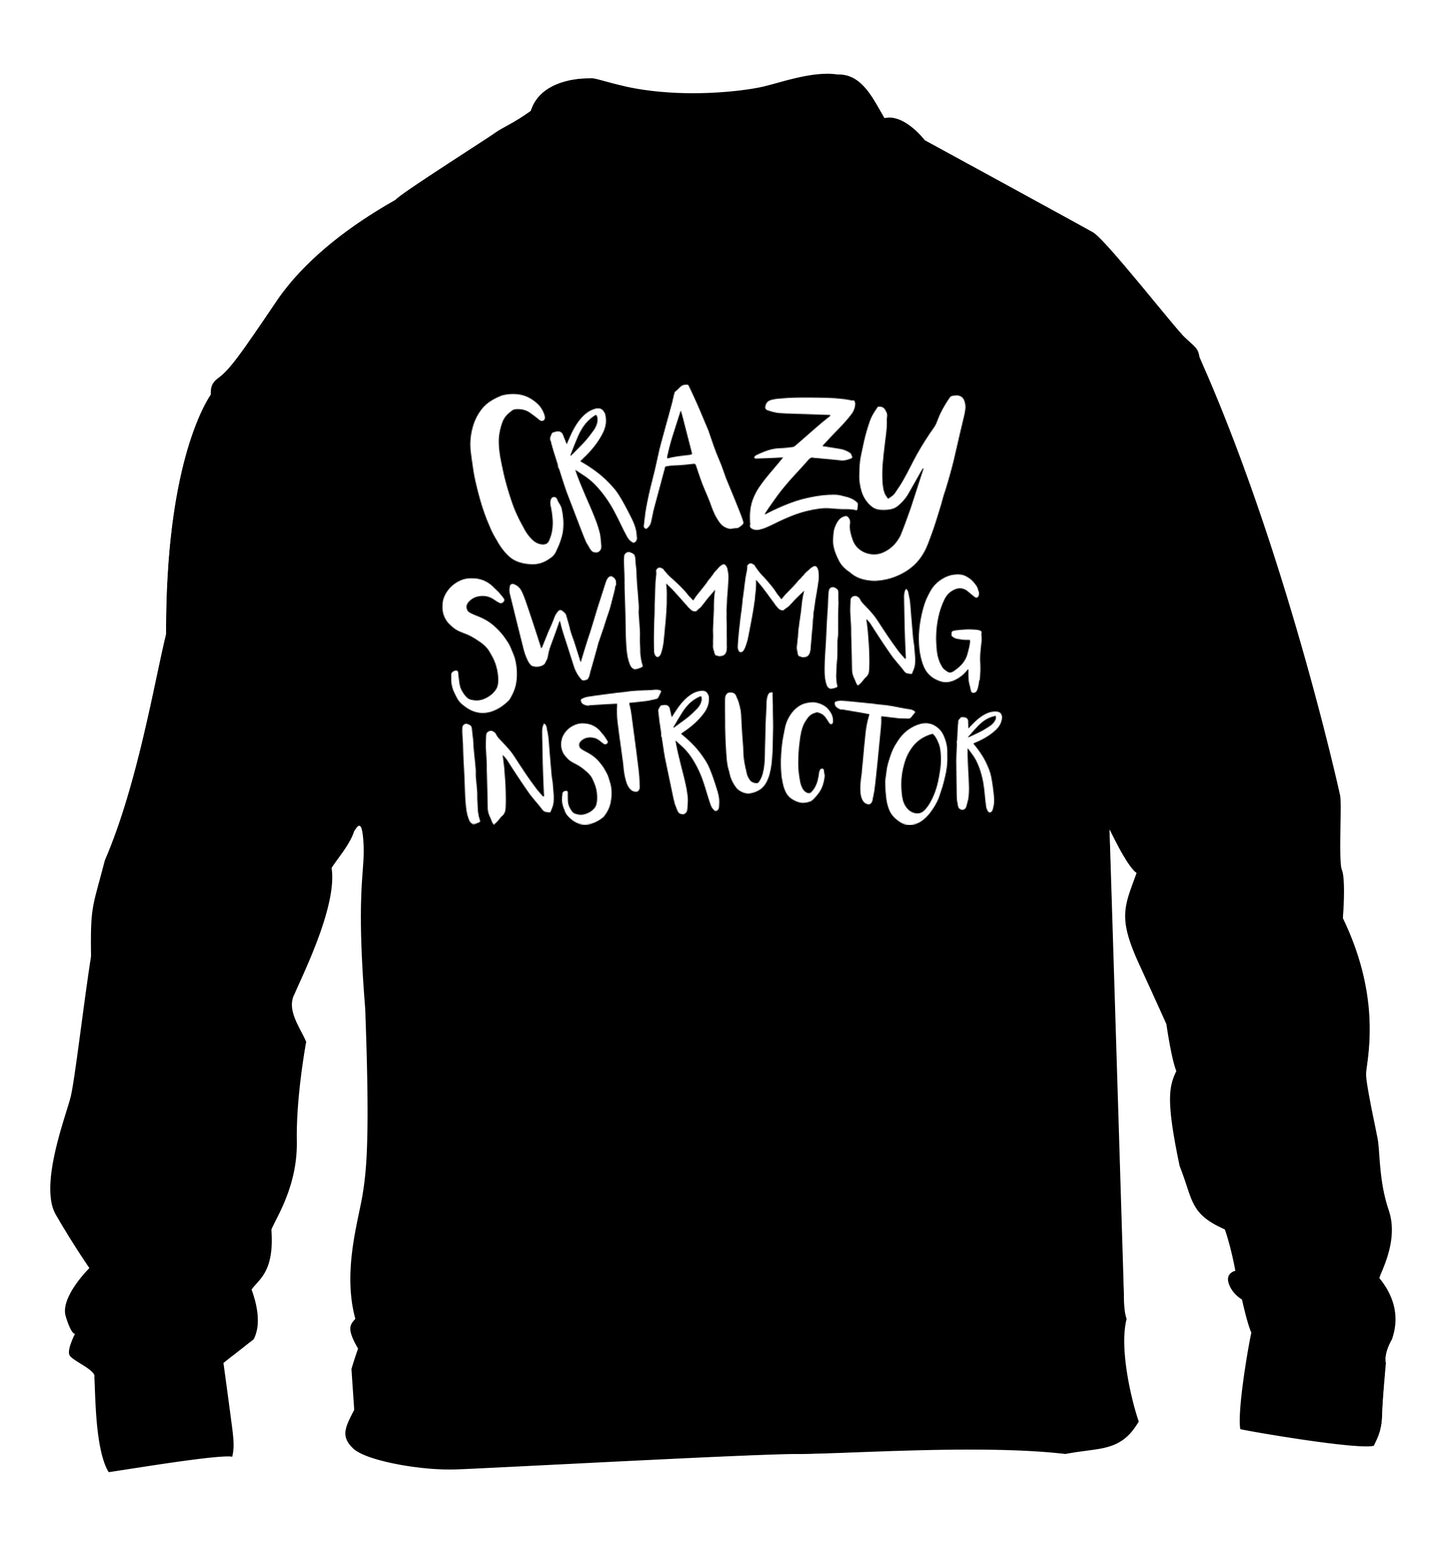 Crazy swimming instructor children's black sweater 12-13 Years